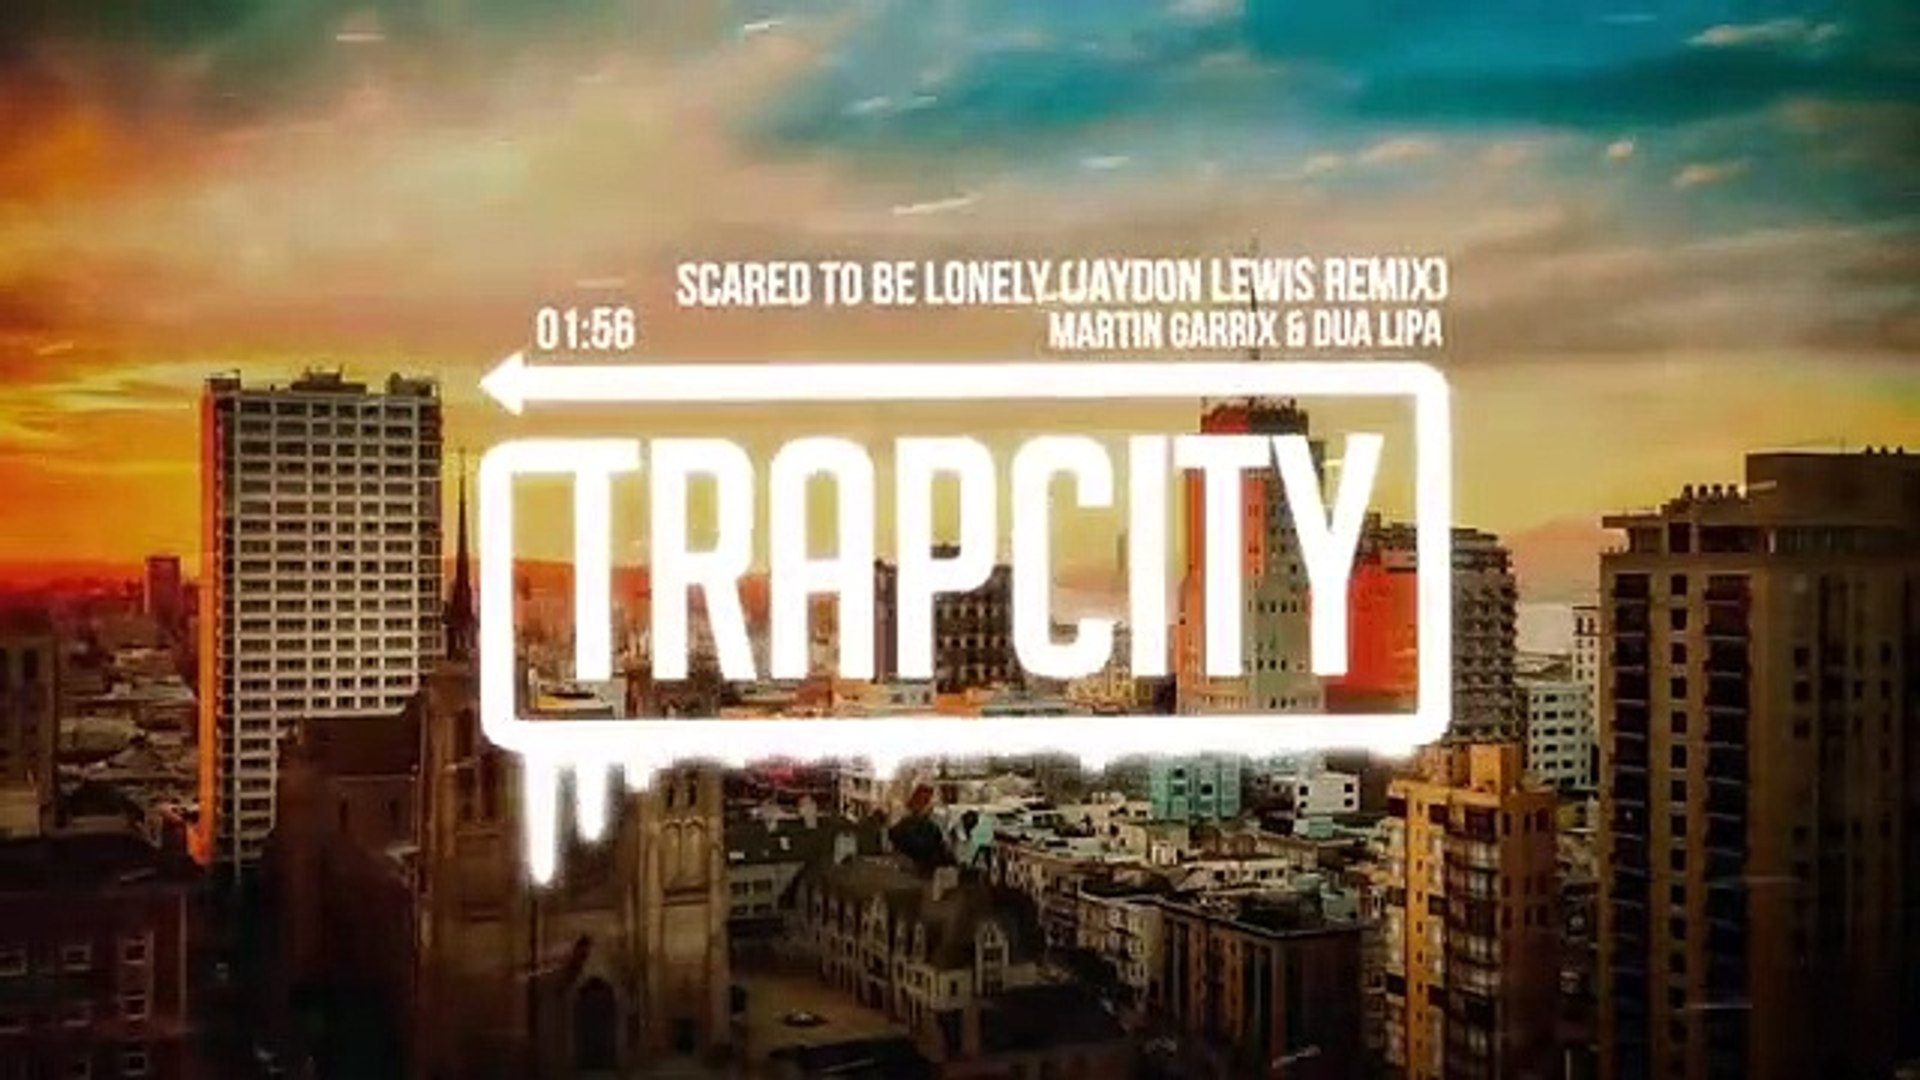 ⁣Martin Garrix & Dua Lipa - Scared To Be Lonely (Jaydon Lewis Remix)